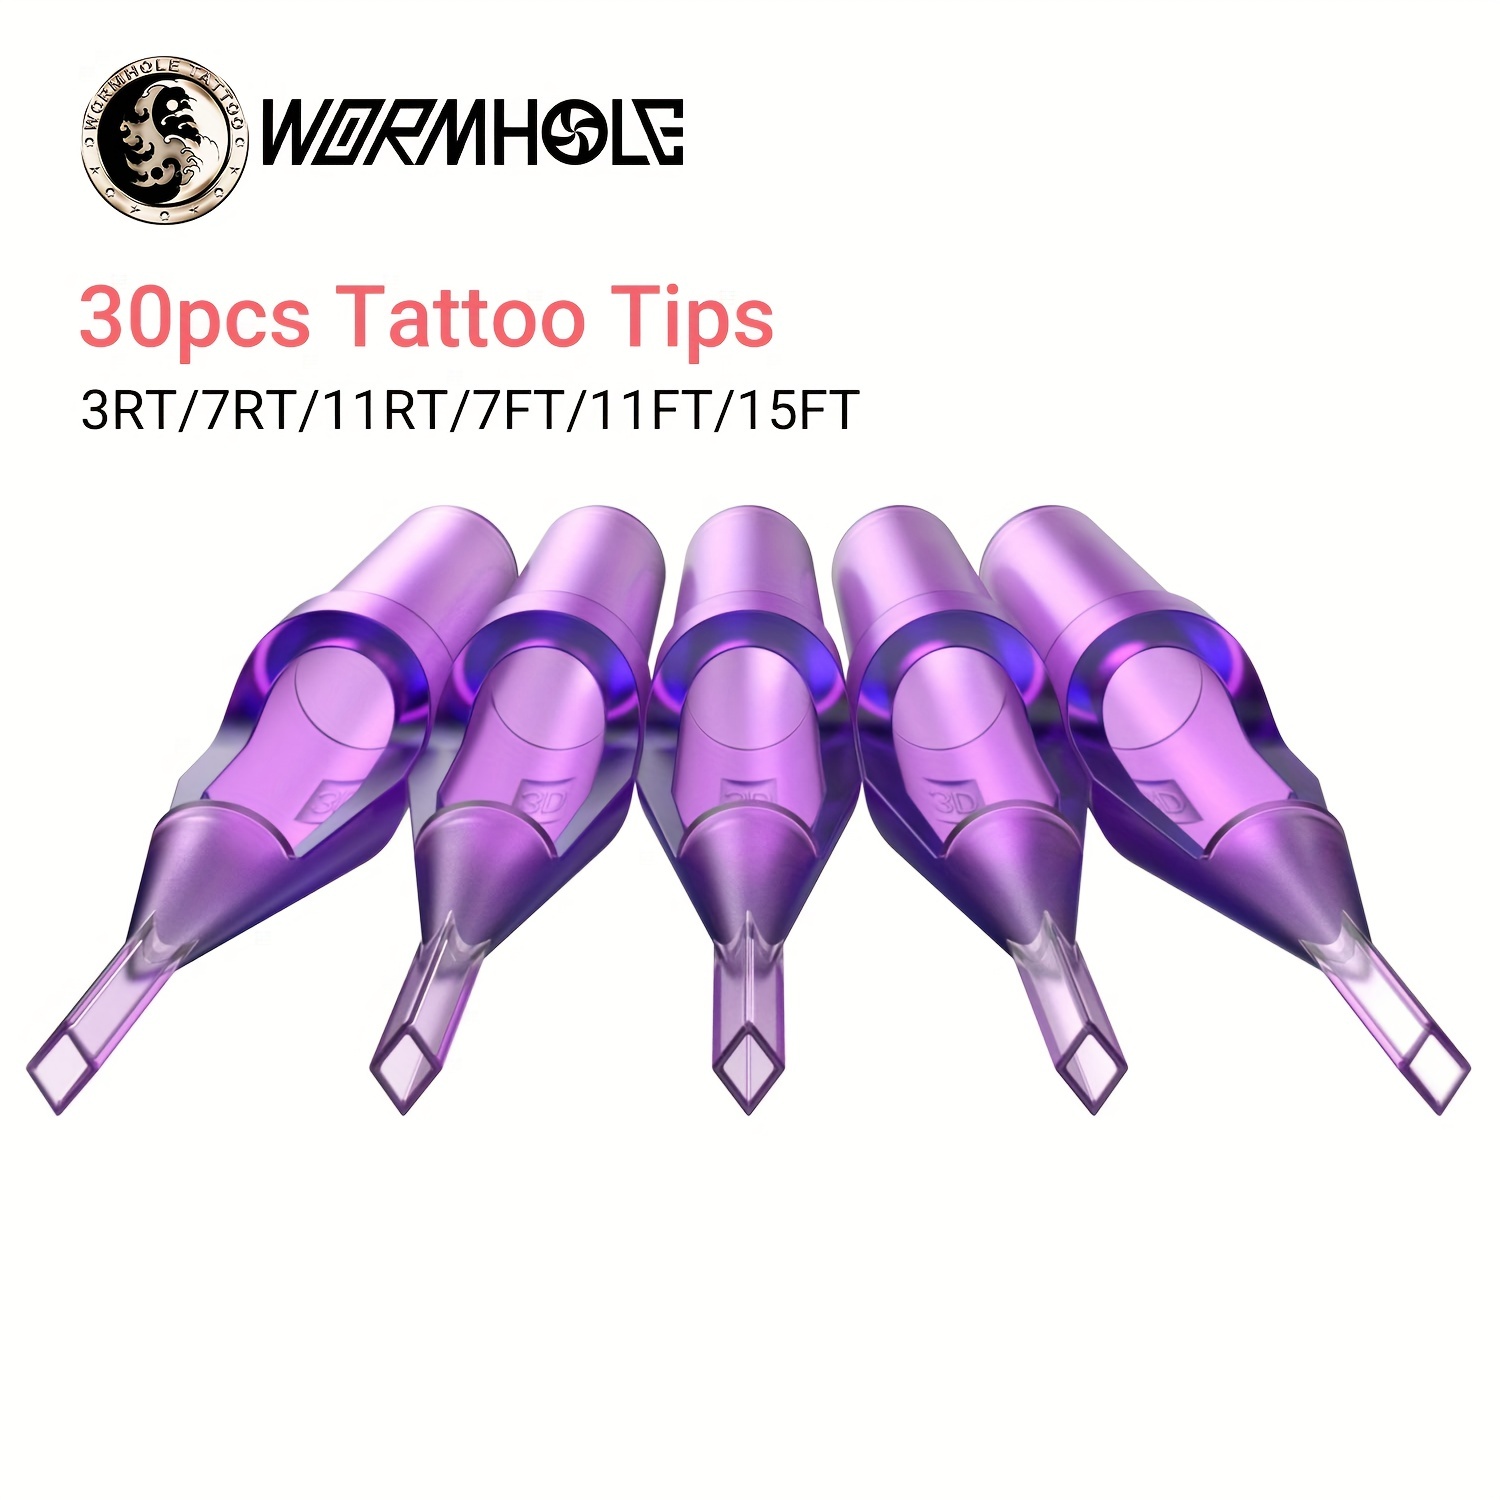 Wormhole Tattoo Cartridge Needles, 20Pcs Mixed Sizes 3RL 5RL 5RM